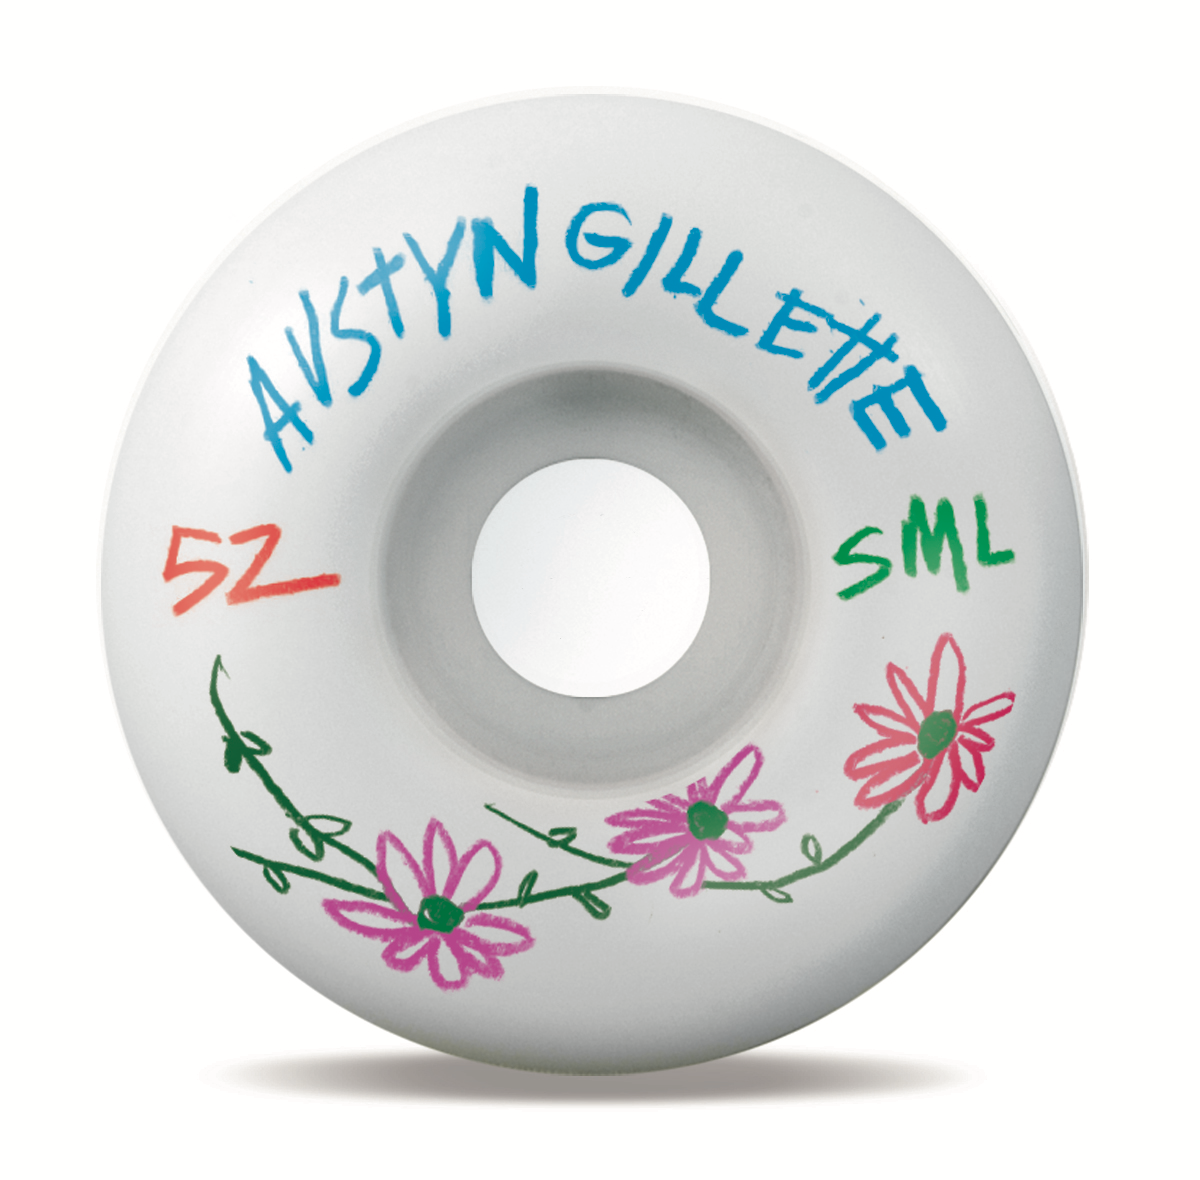 Pulsadores de lápiz SML - Austyn Gillette - 52 mm